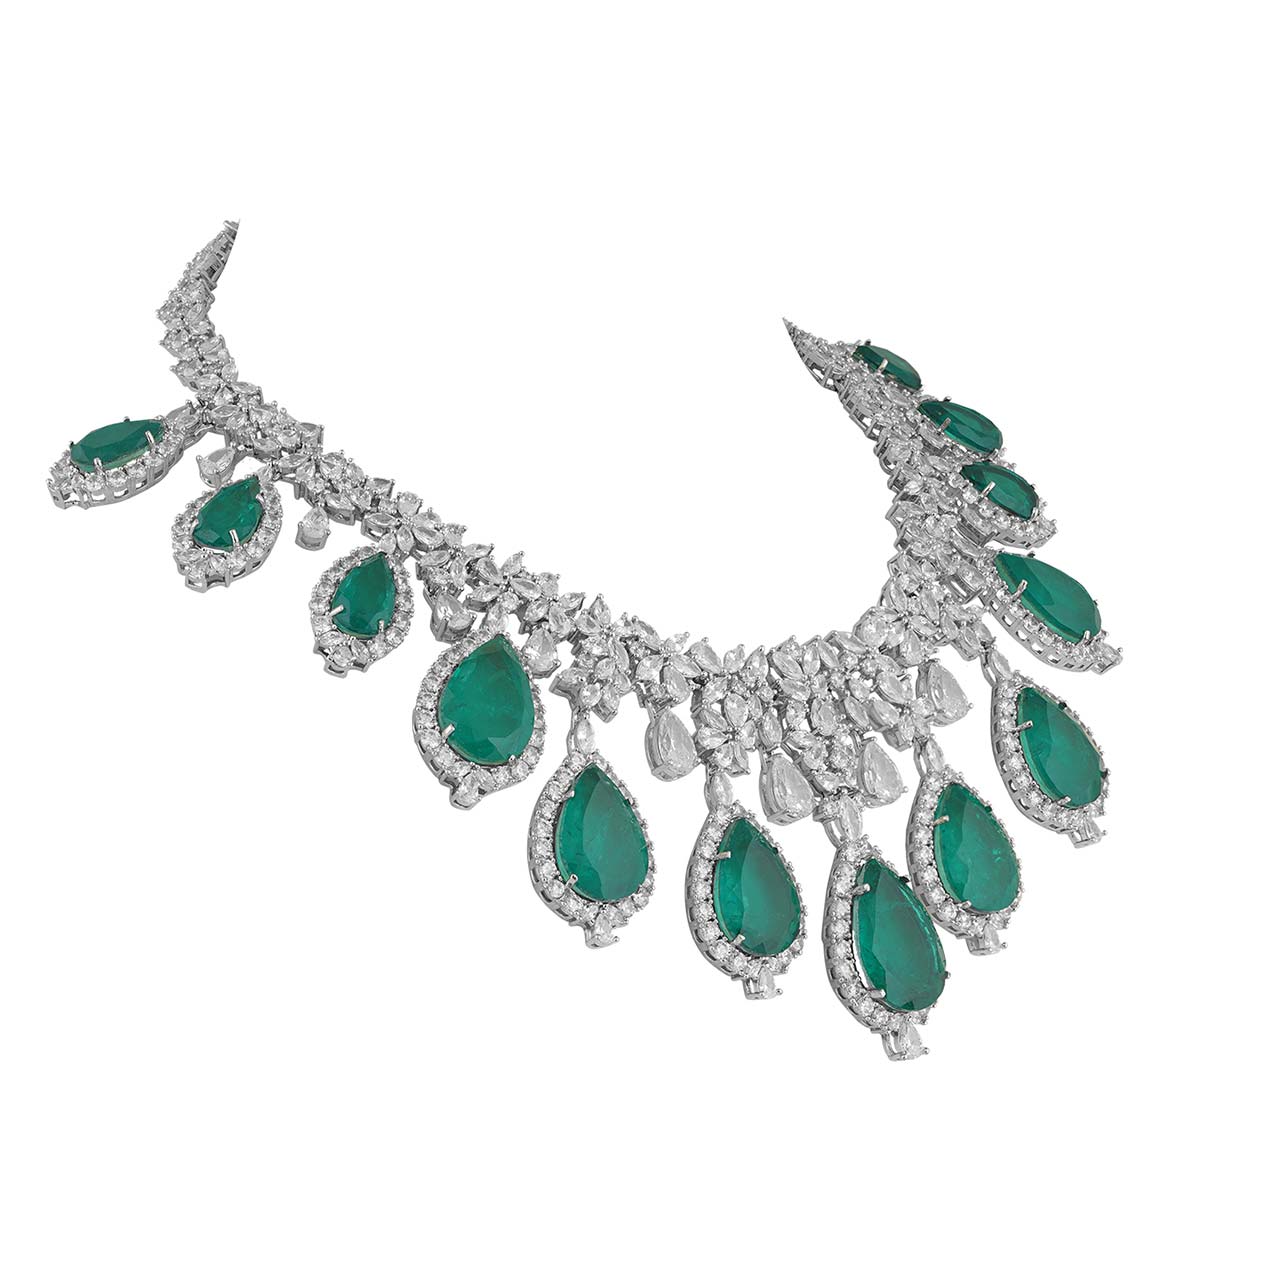 Cubic Zirconia Emerald Green Tear Drop Necklace Set